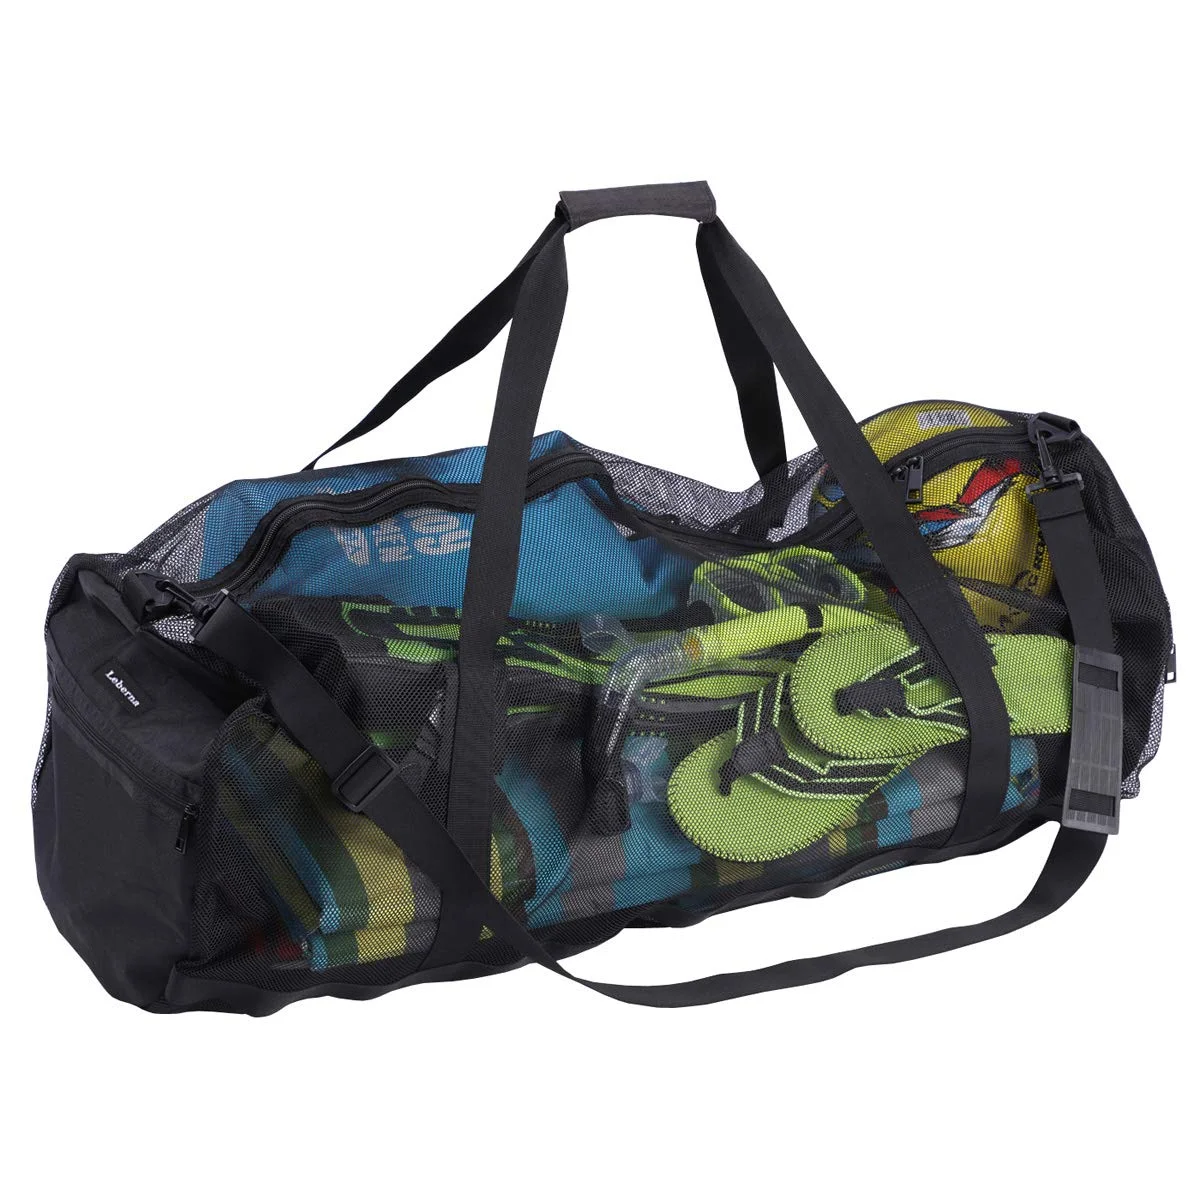 Baoblaze Heavy Duty Mesh Dive Gear Bag for SCUBA and Snorkeling Equipment Features Exterior Accessory Pocket & Adjustable Shoulder Strap 